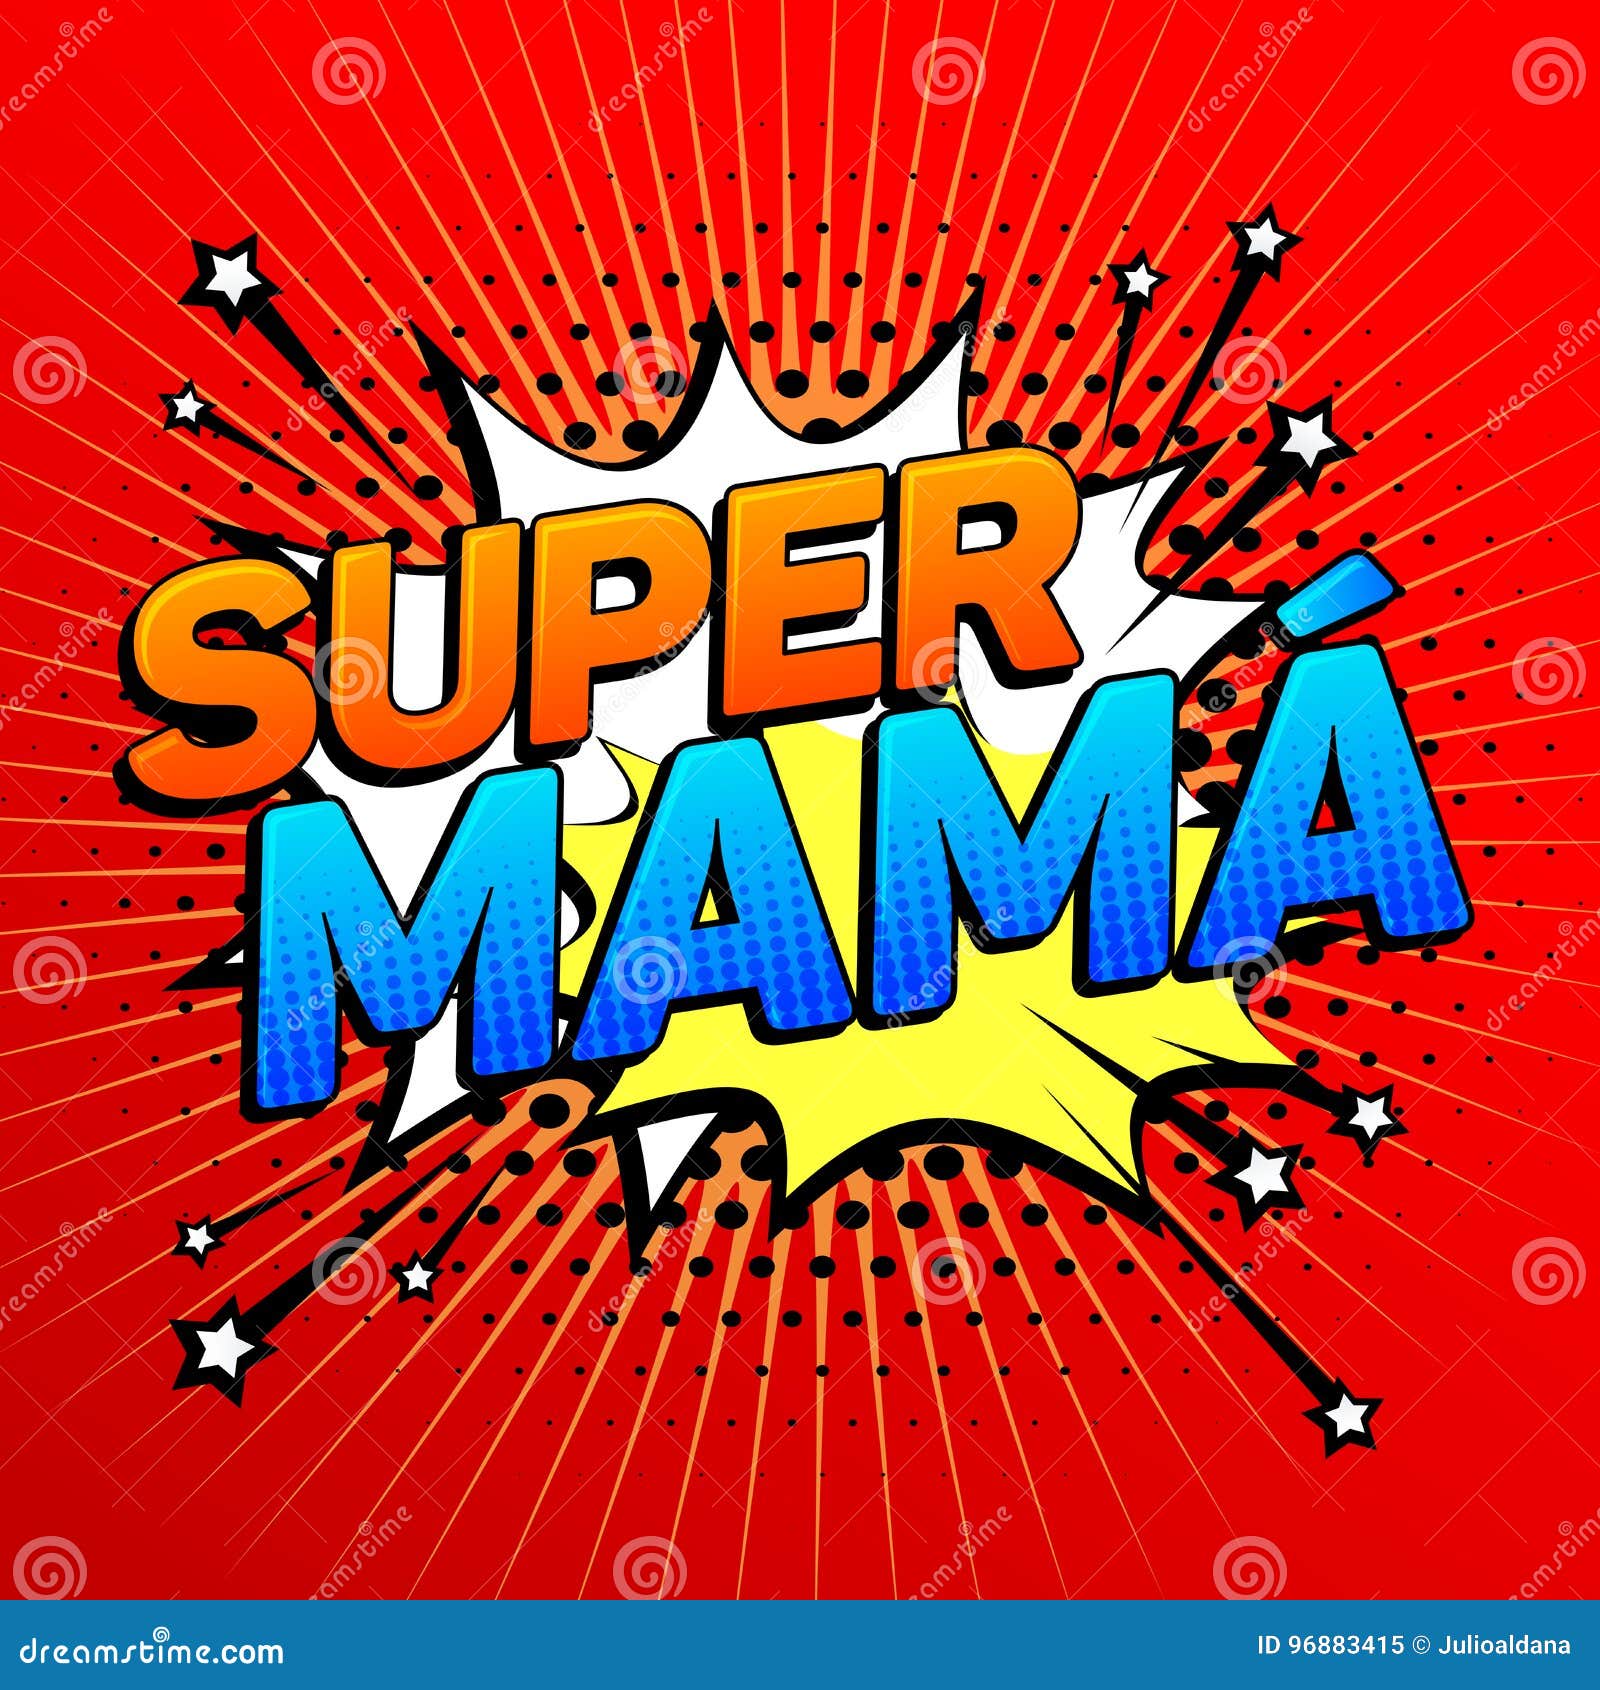 super mama, super mom spanish text, mother celebration